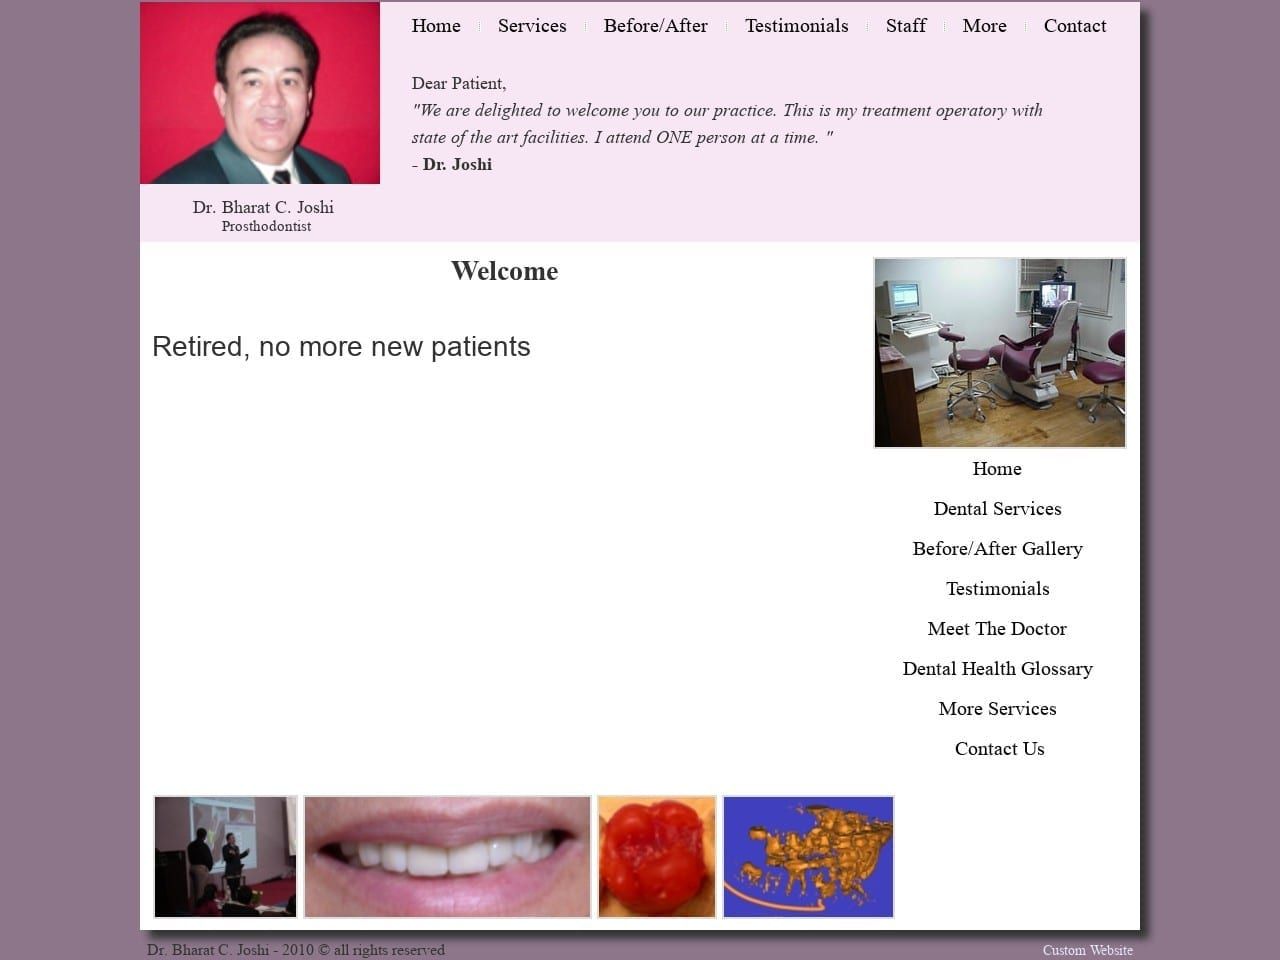 Bharat C. Joshi Prosthodontist Website Screenshot from dentalimplantprosthesis.com